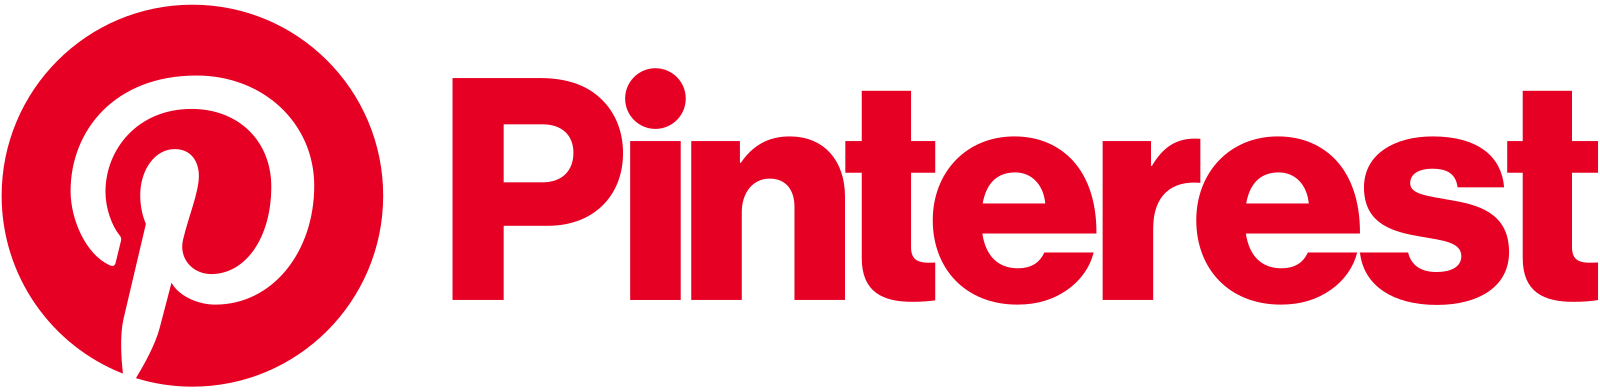 1600px-Pinterest_Logo.svg.png